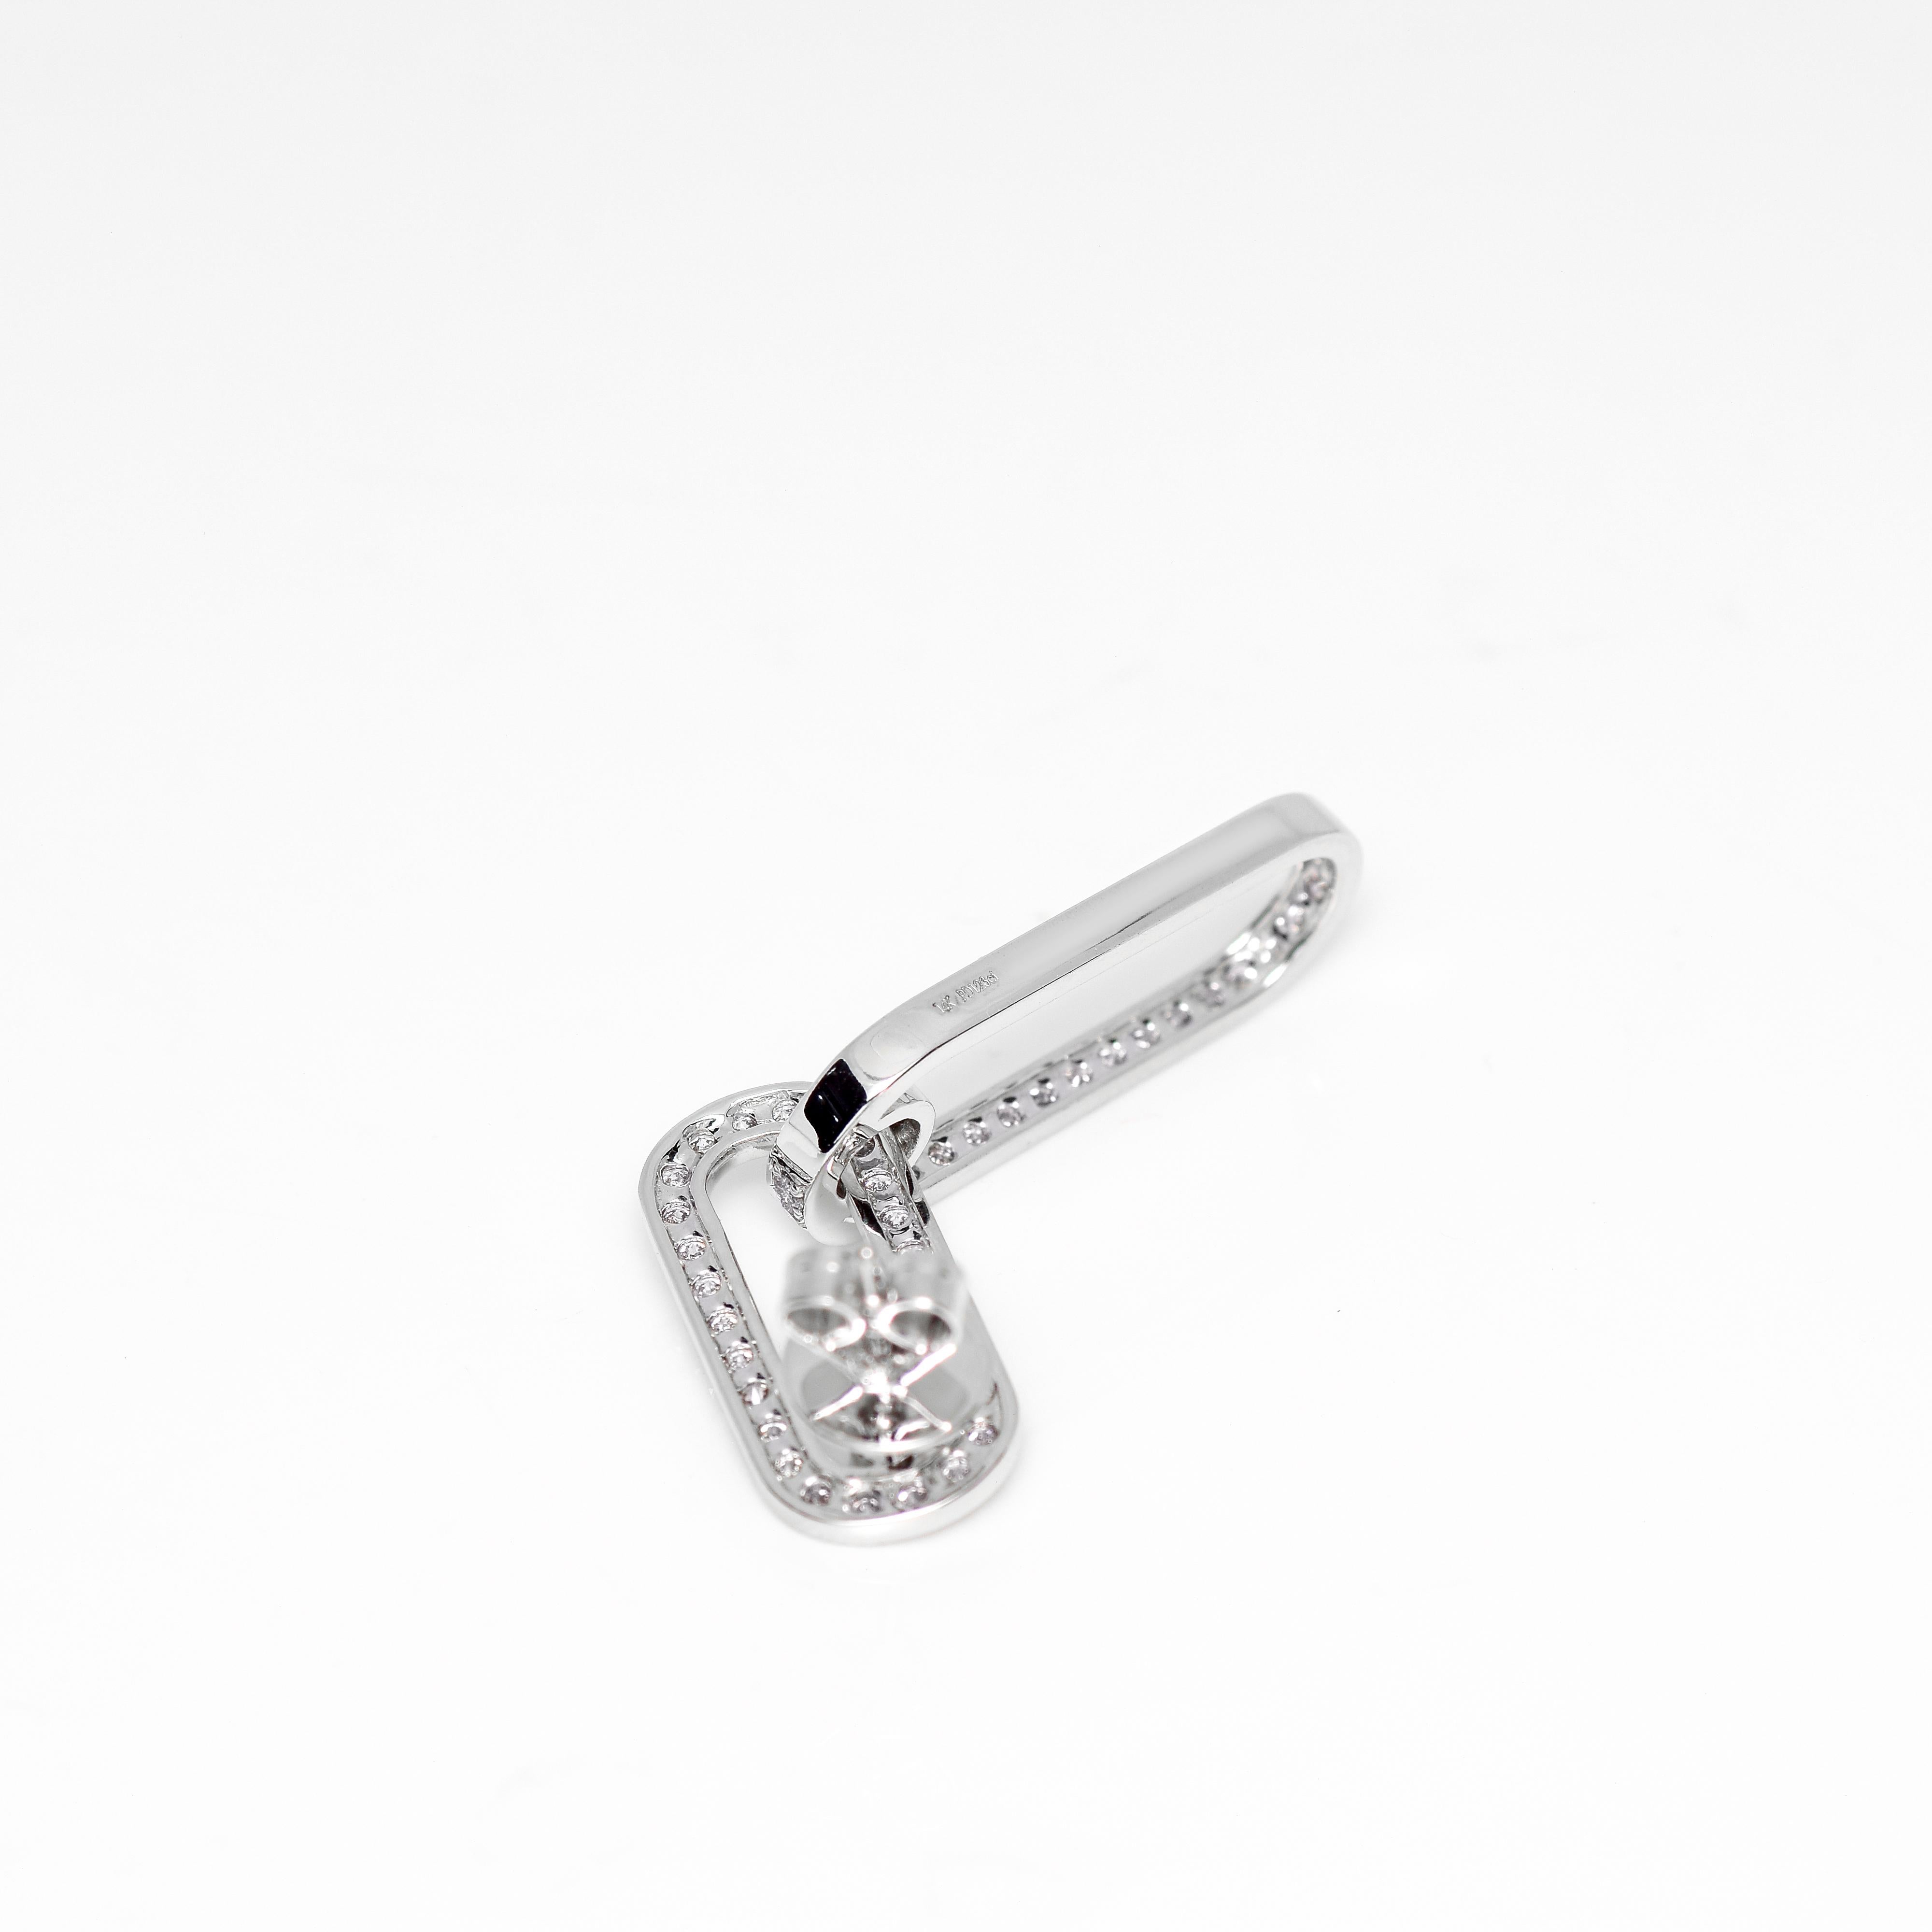 IGI 14K 1.23 ct Natural Pink Diamonds Art Deco Design Stud Earrings 2